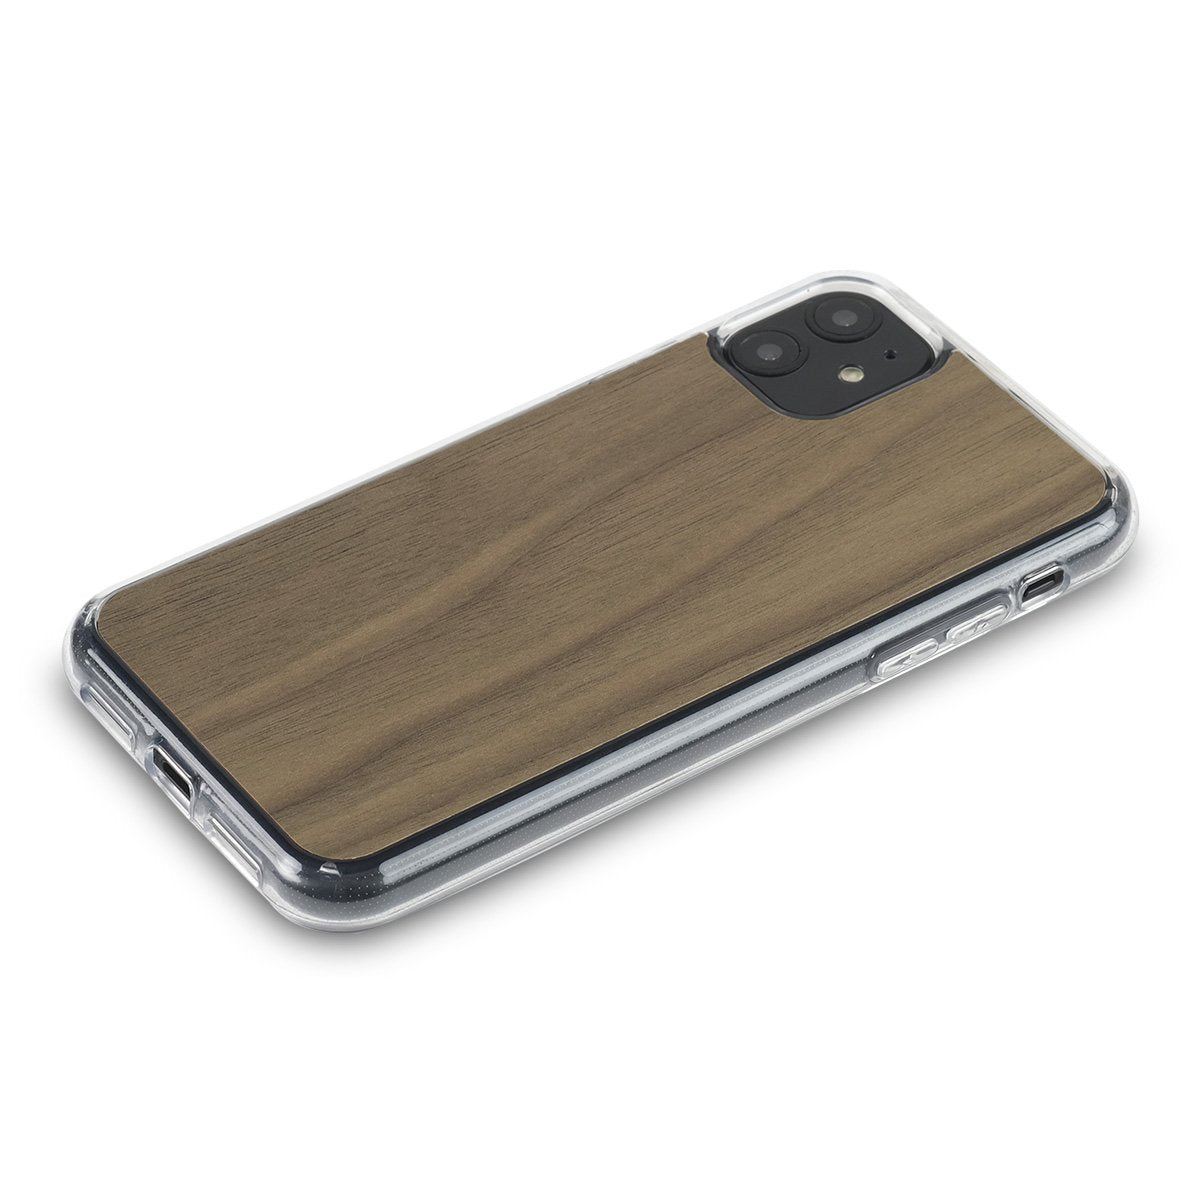 iPhone 11 Pro —  #WoodBack Explorer Clear Case